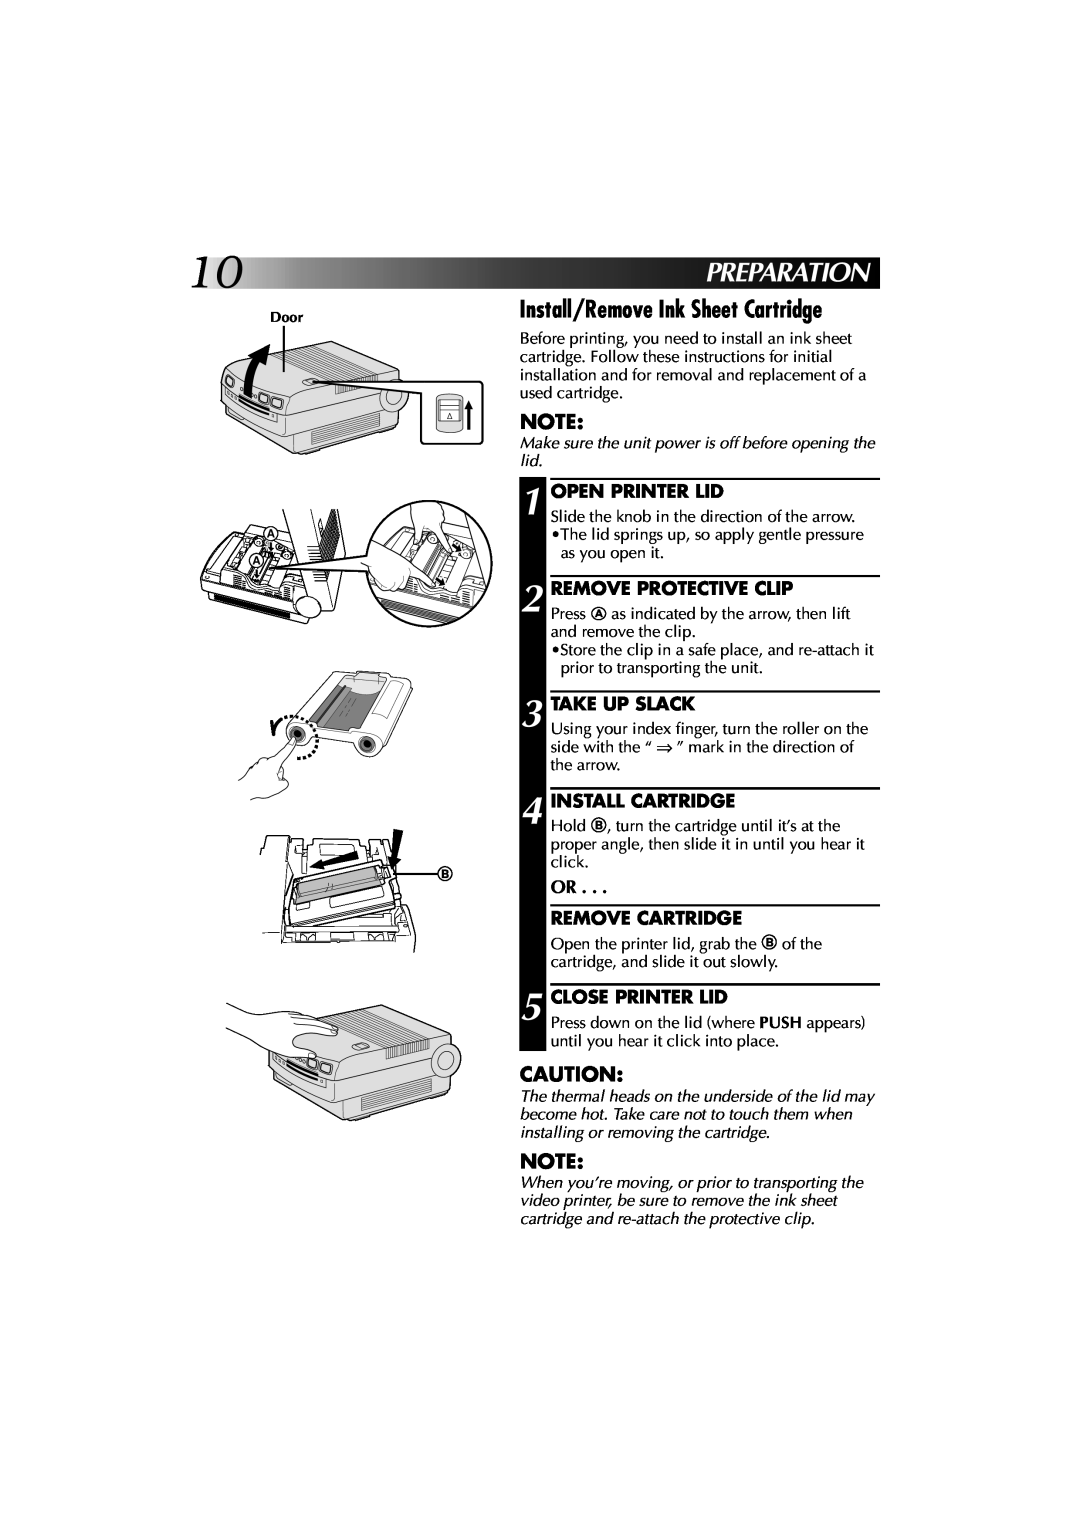 JVC GV-PT1 manual Preparation, Install/Remove Ink Sheet Cartridge, Open Printer Lid, Remove Protective Clip, Take Up Slack 